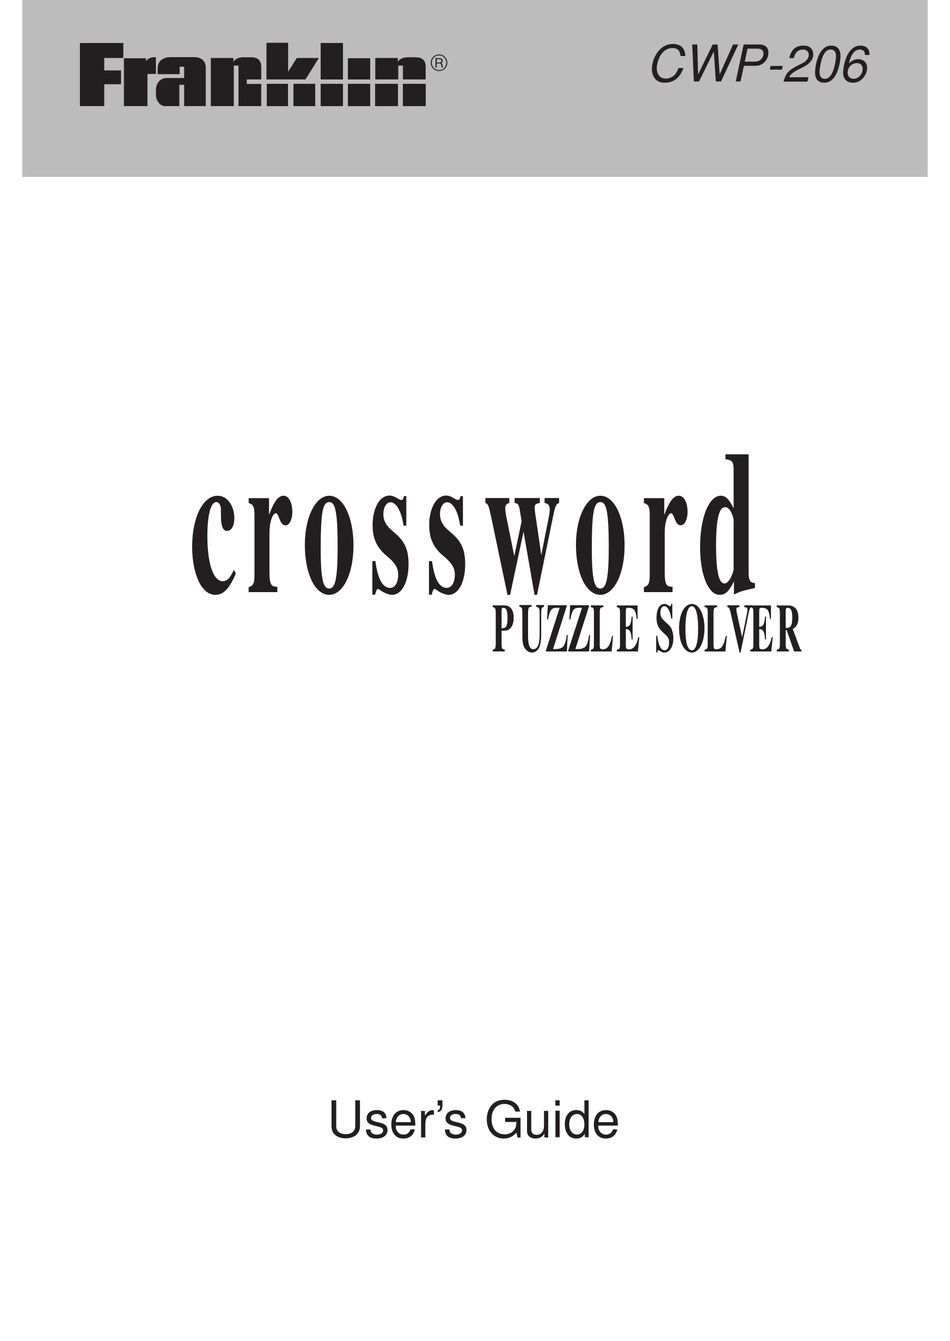 Franklin Merriam-Webster Crossword Puzzle Solver CWP-206